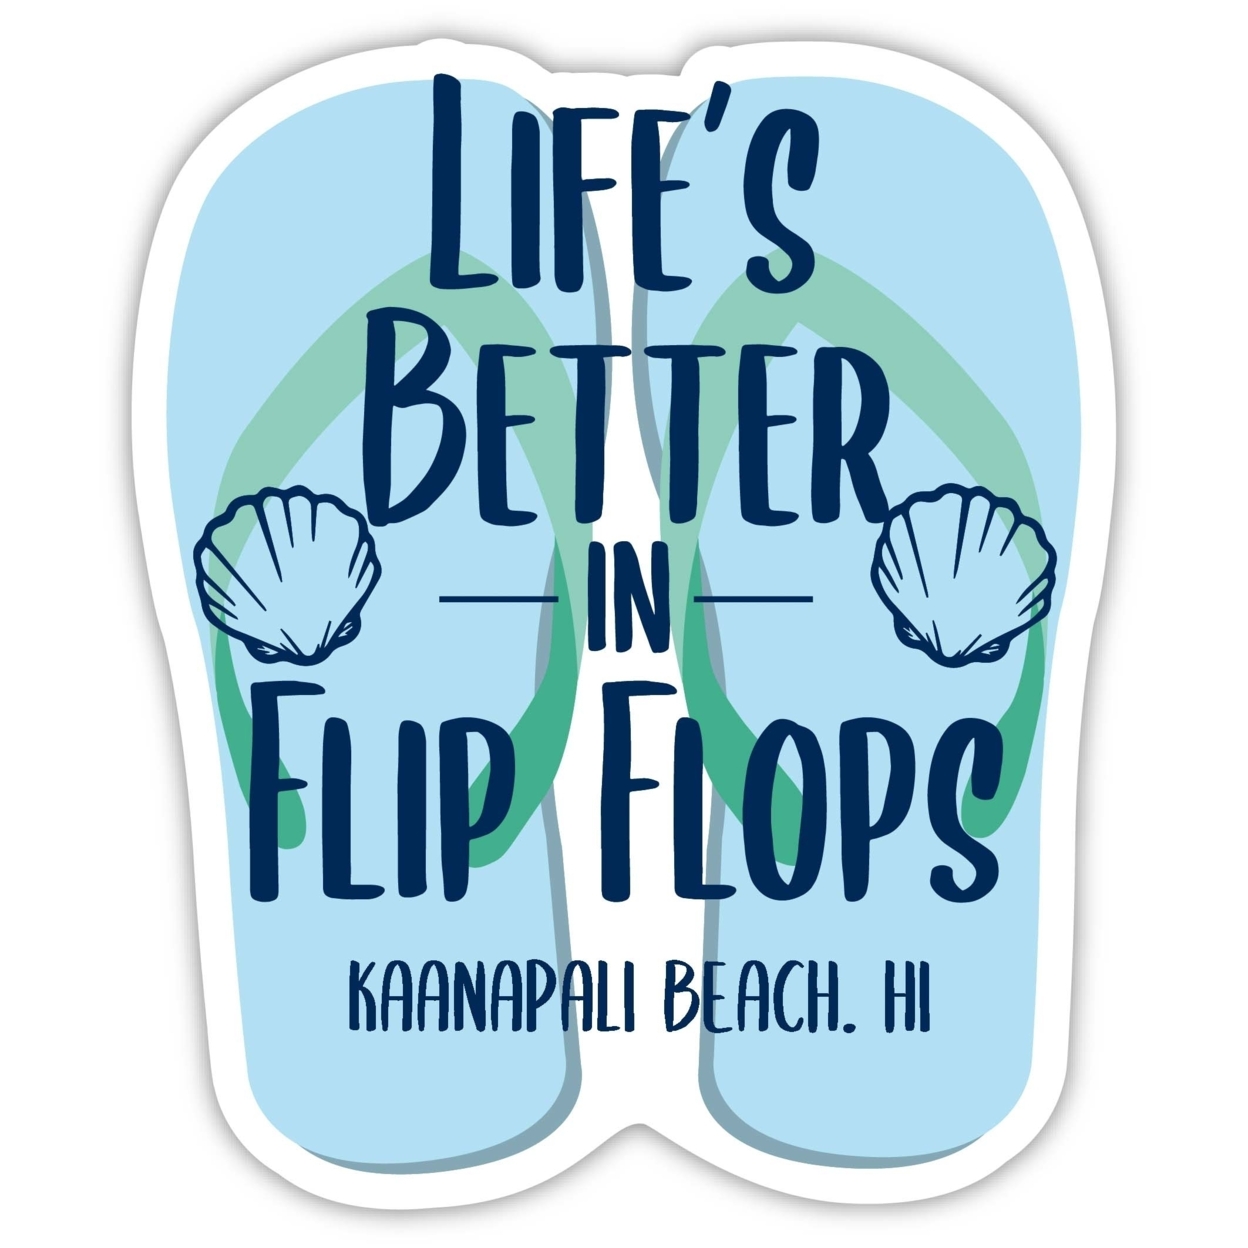 Kaanapali Beach Hawaii Souvenir 4 Inch Vinyl Decal Sticker Flip Flop Design